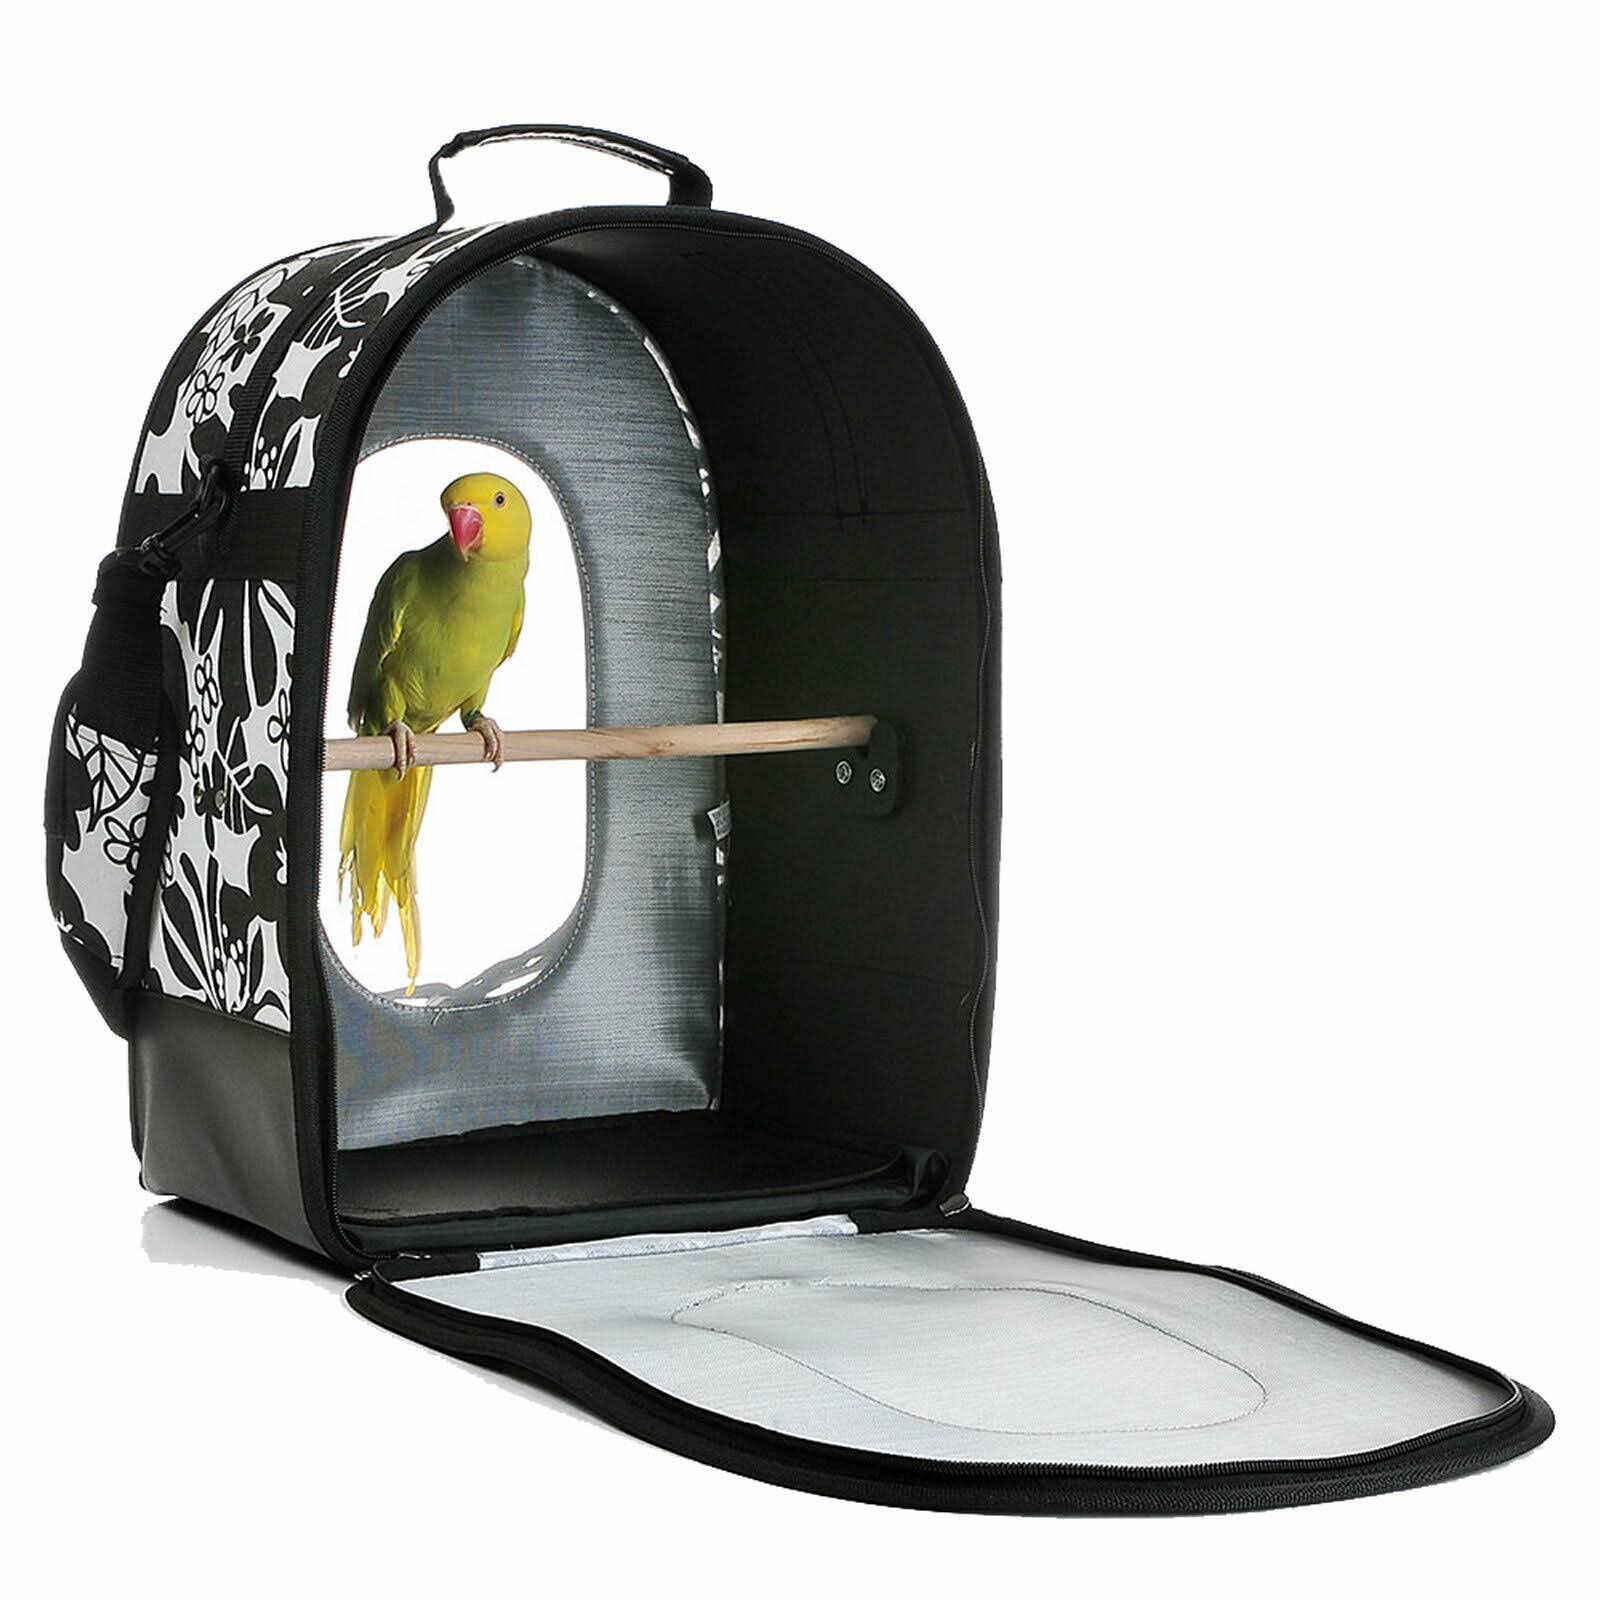 A&E Cage Company Happy Beaks Travel Bird Carrier - Black, Soft Sided